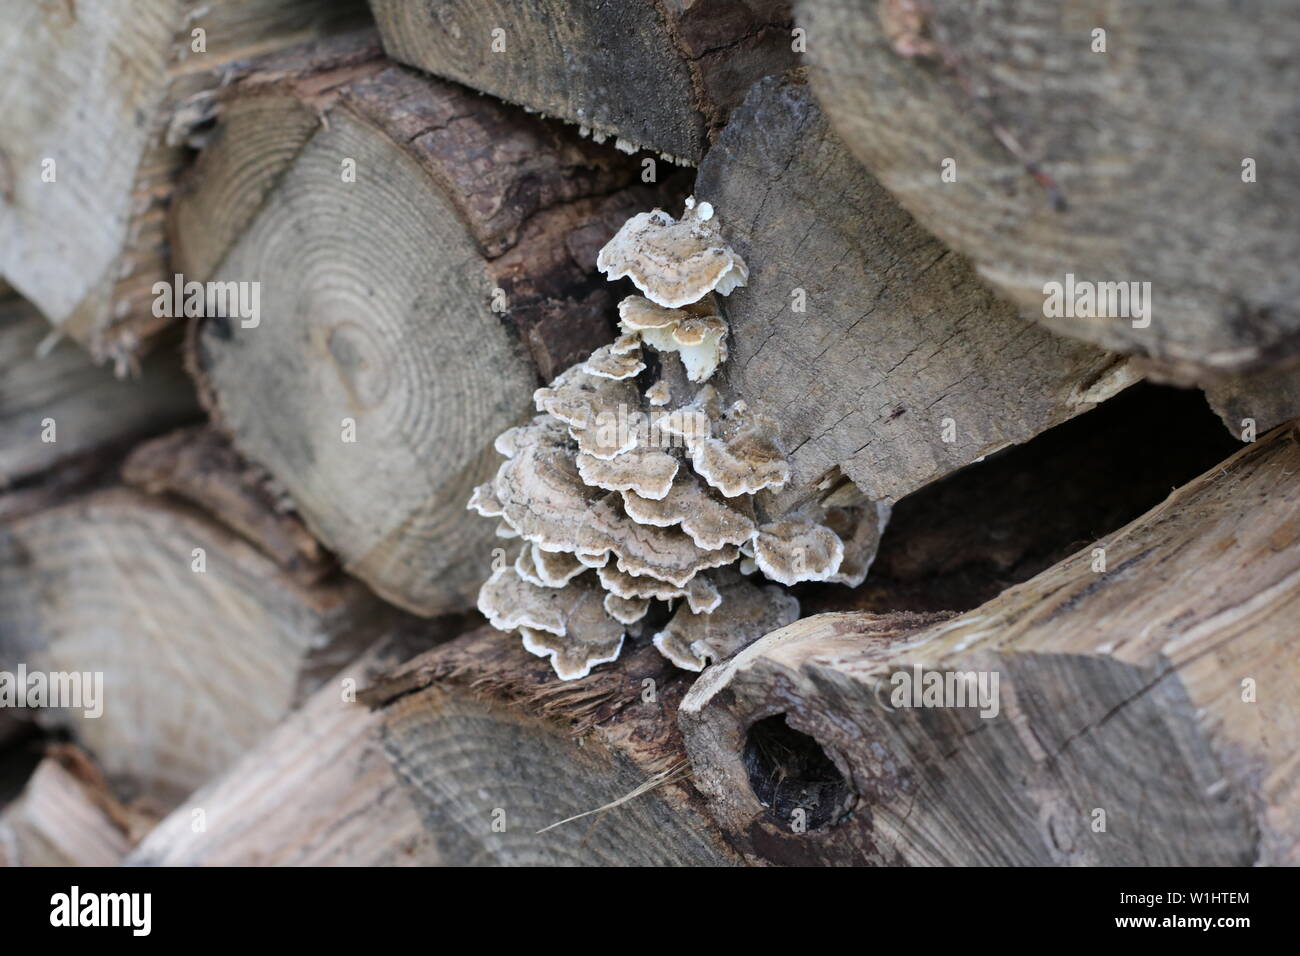 Fungus on Wood Logs Stock Photo